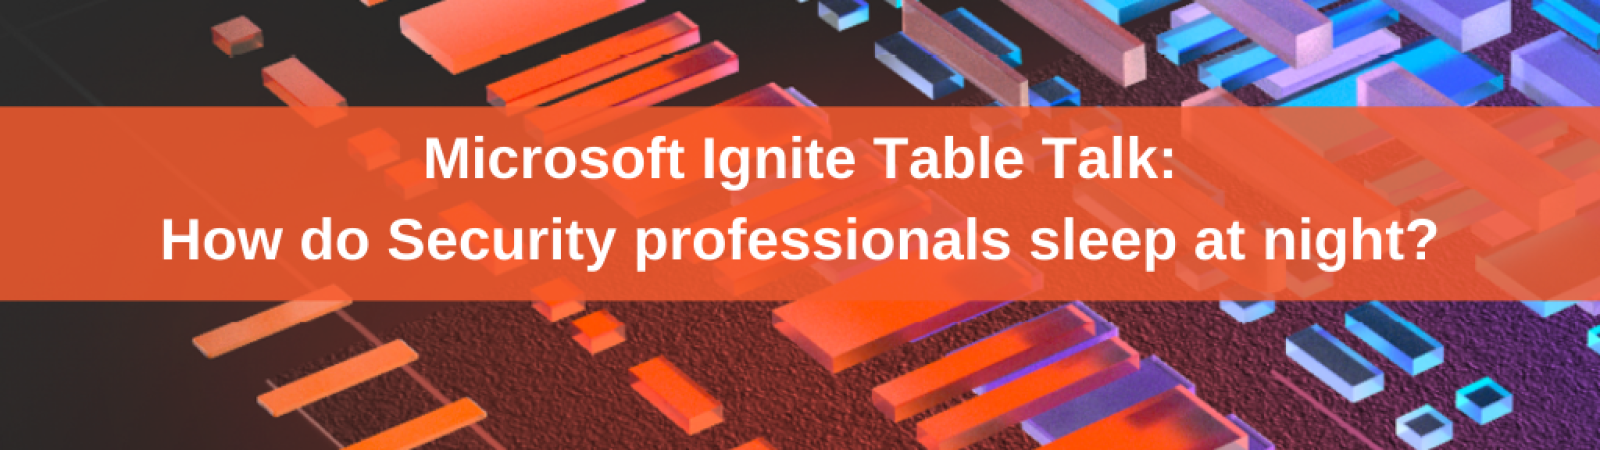 Microsoft Ignite Table Talk